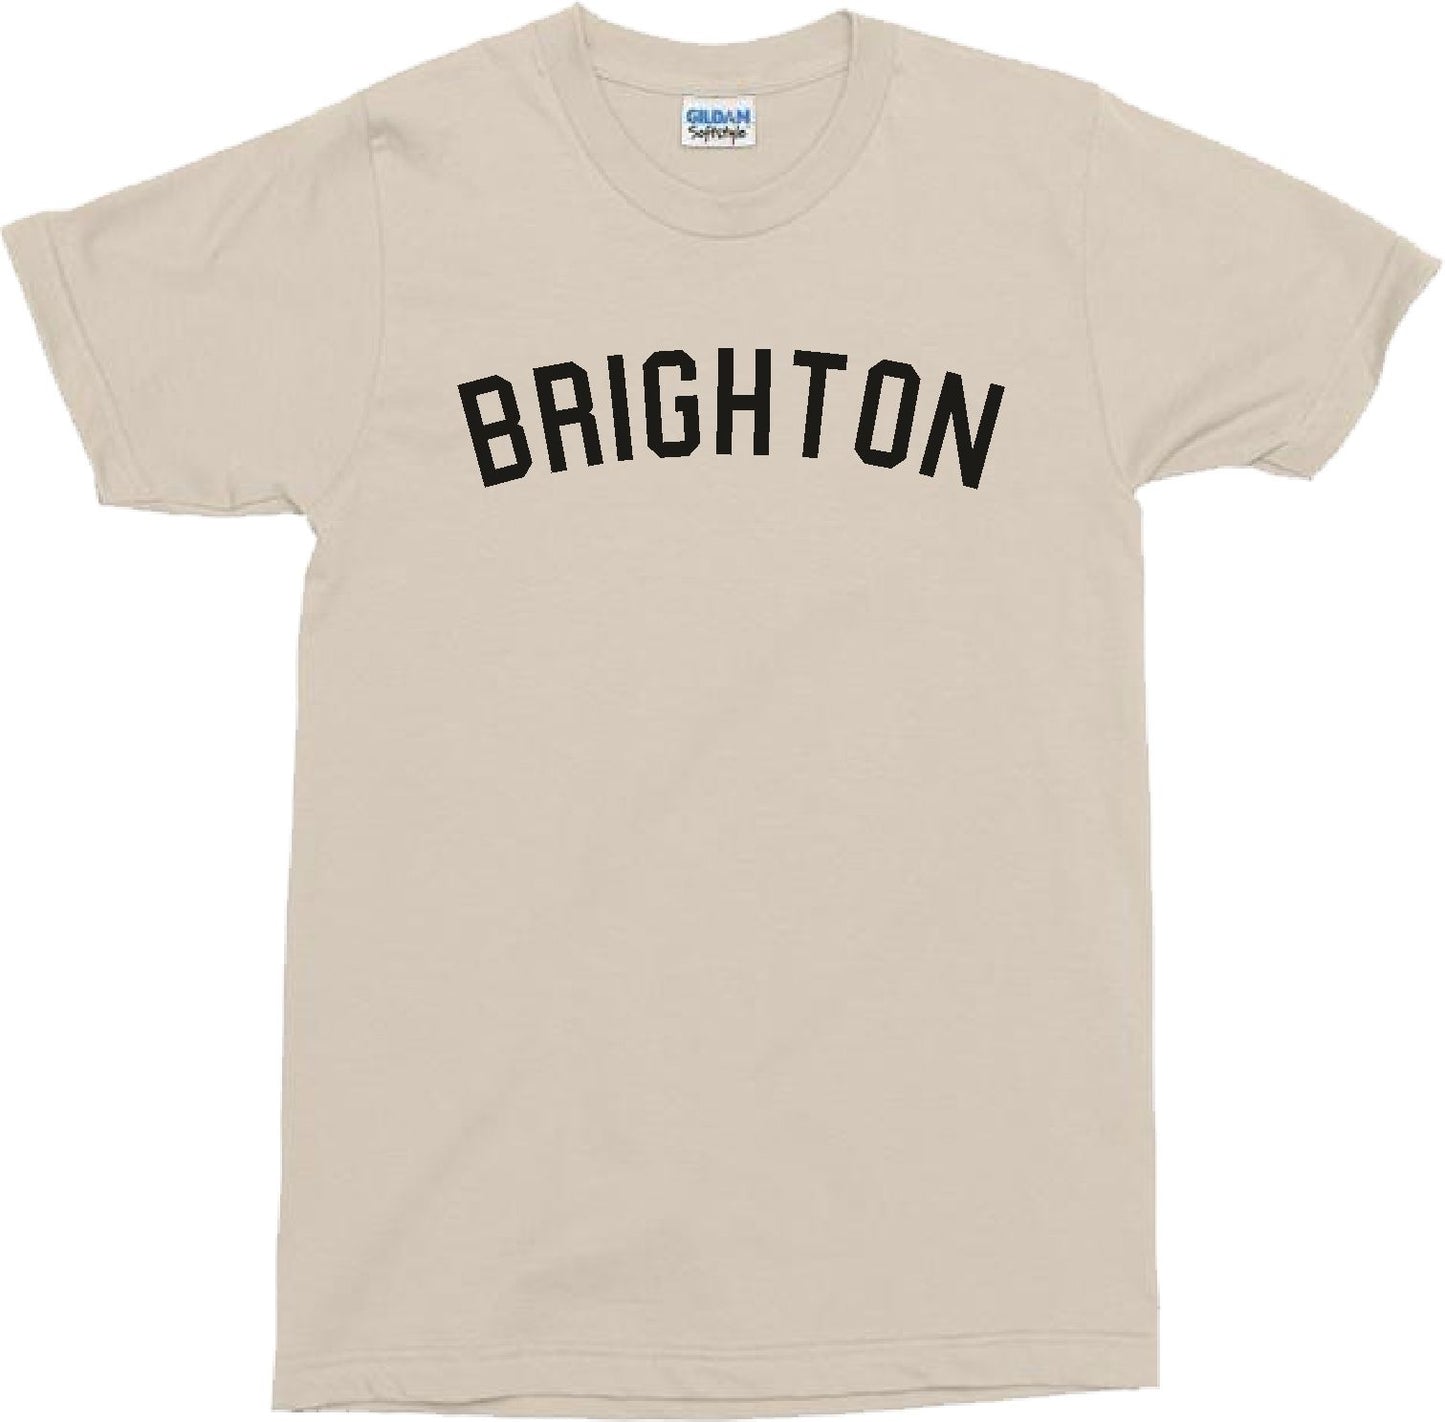 Brighton T-Shirt - UK Souvenir, England, Various Colours, S-XXL